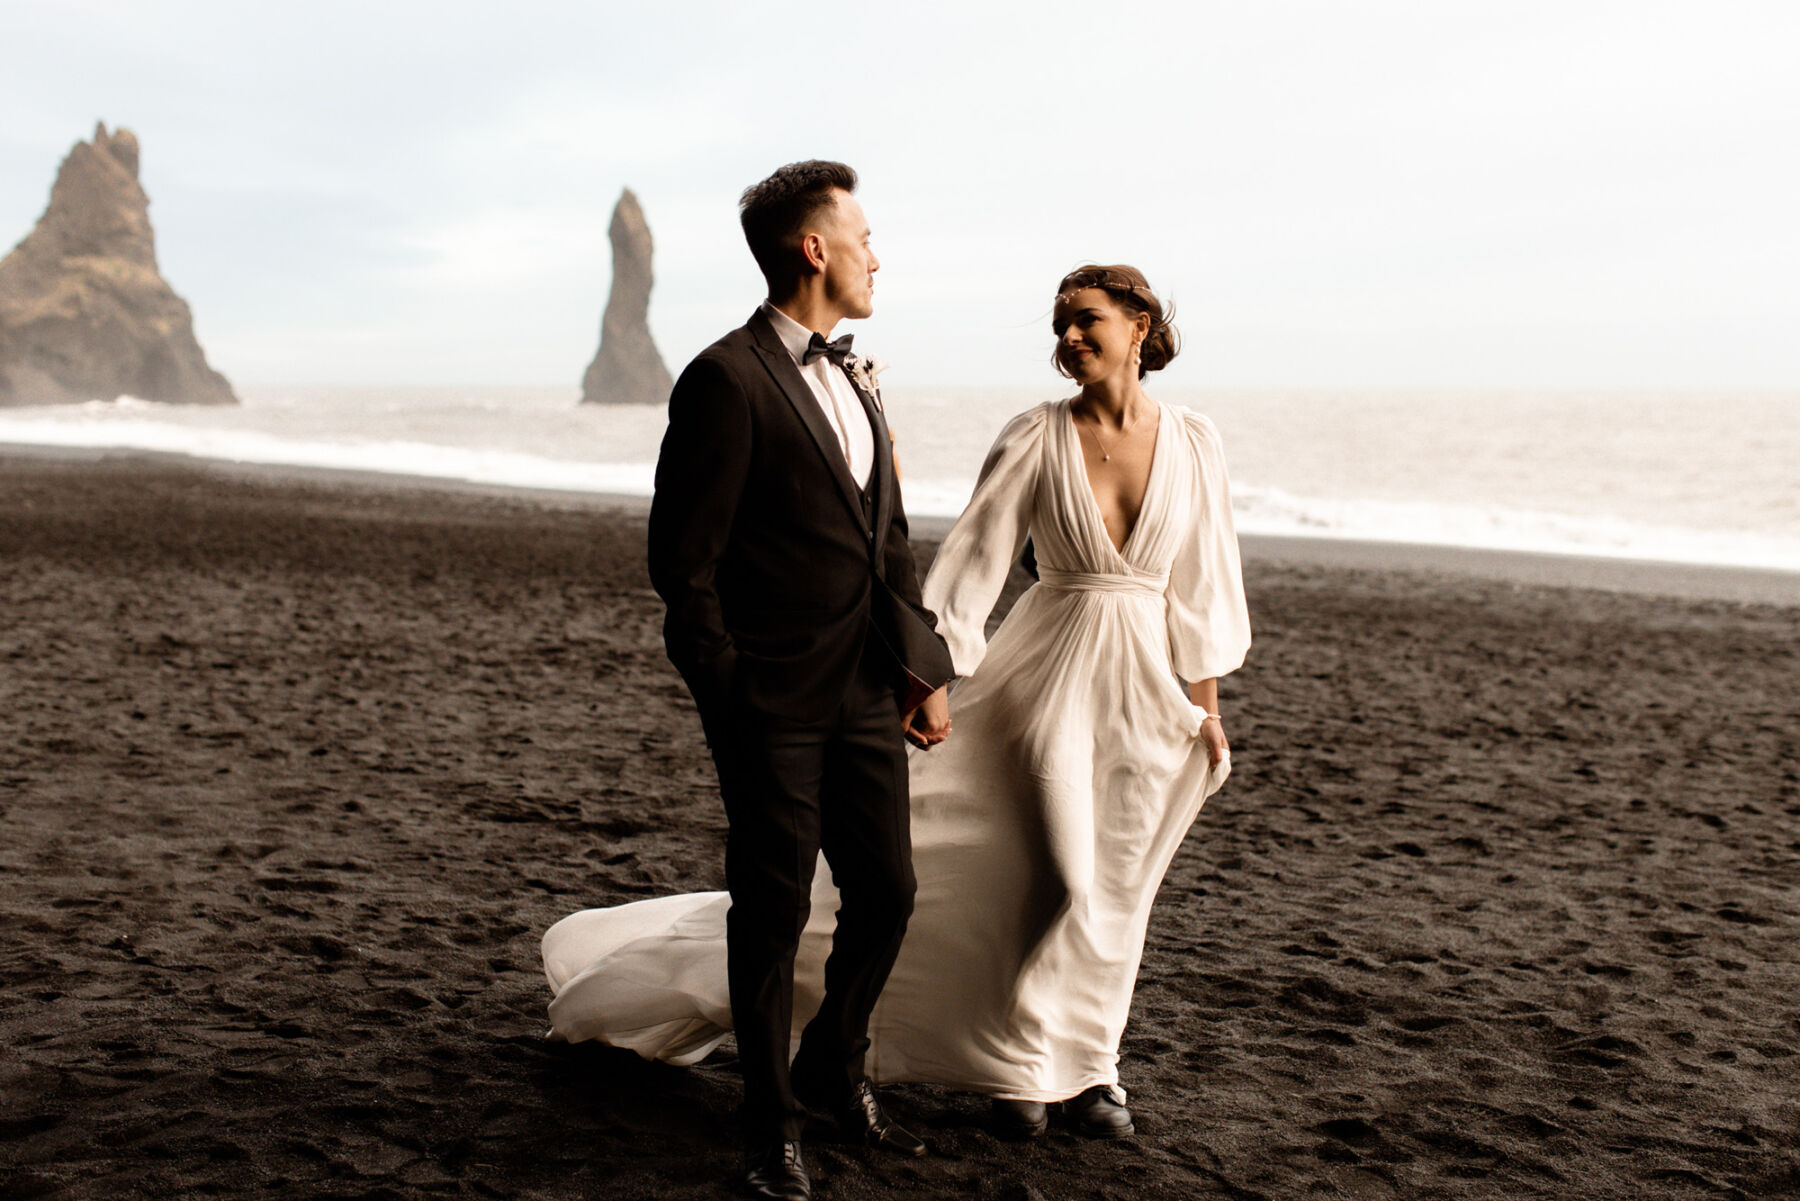 Windswept scene on a black sands beach in Iceland. Groom in black tie, bride in billowing silk dress